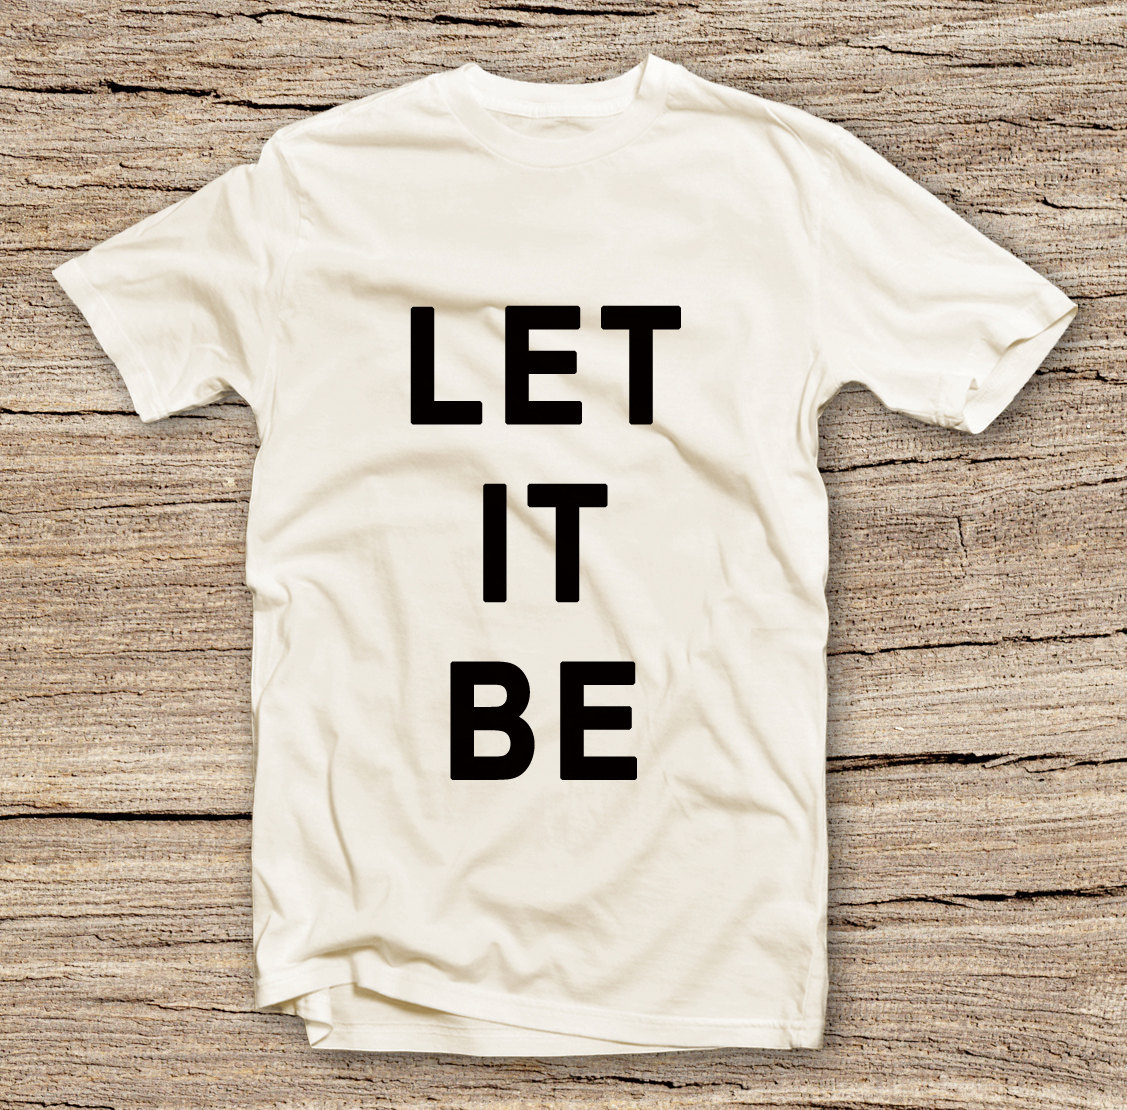 Pts-172 Let It Be T-shirt, Fashion Shirts, Funny T-shirt, Cute T-shirts